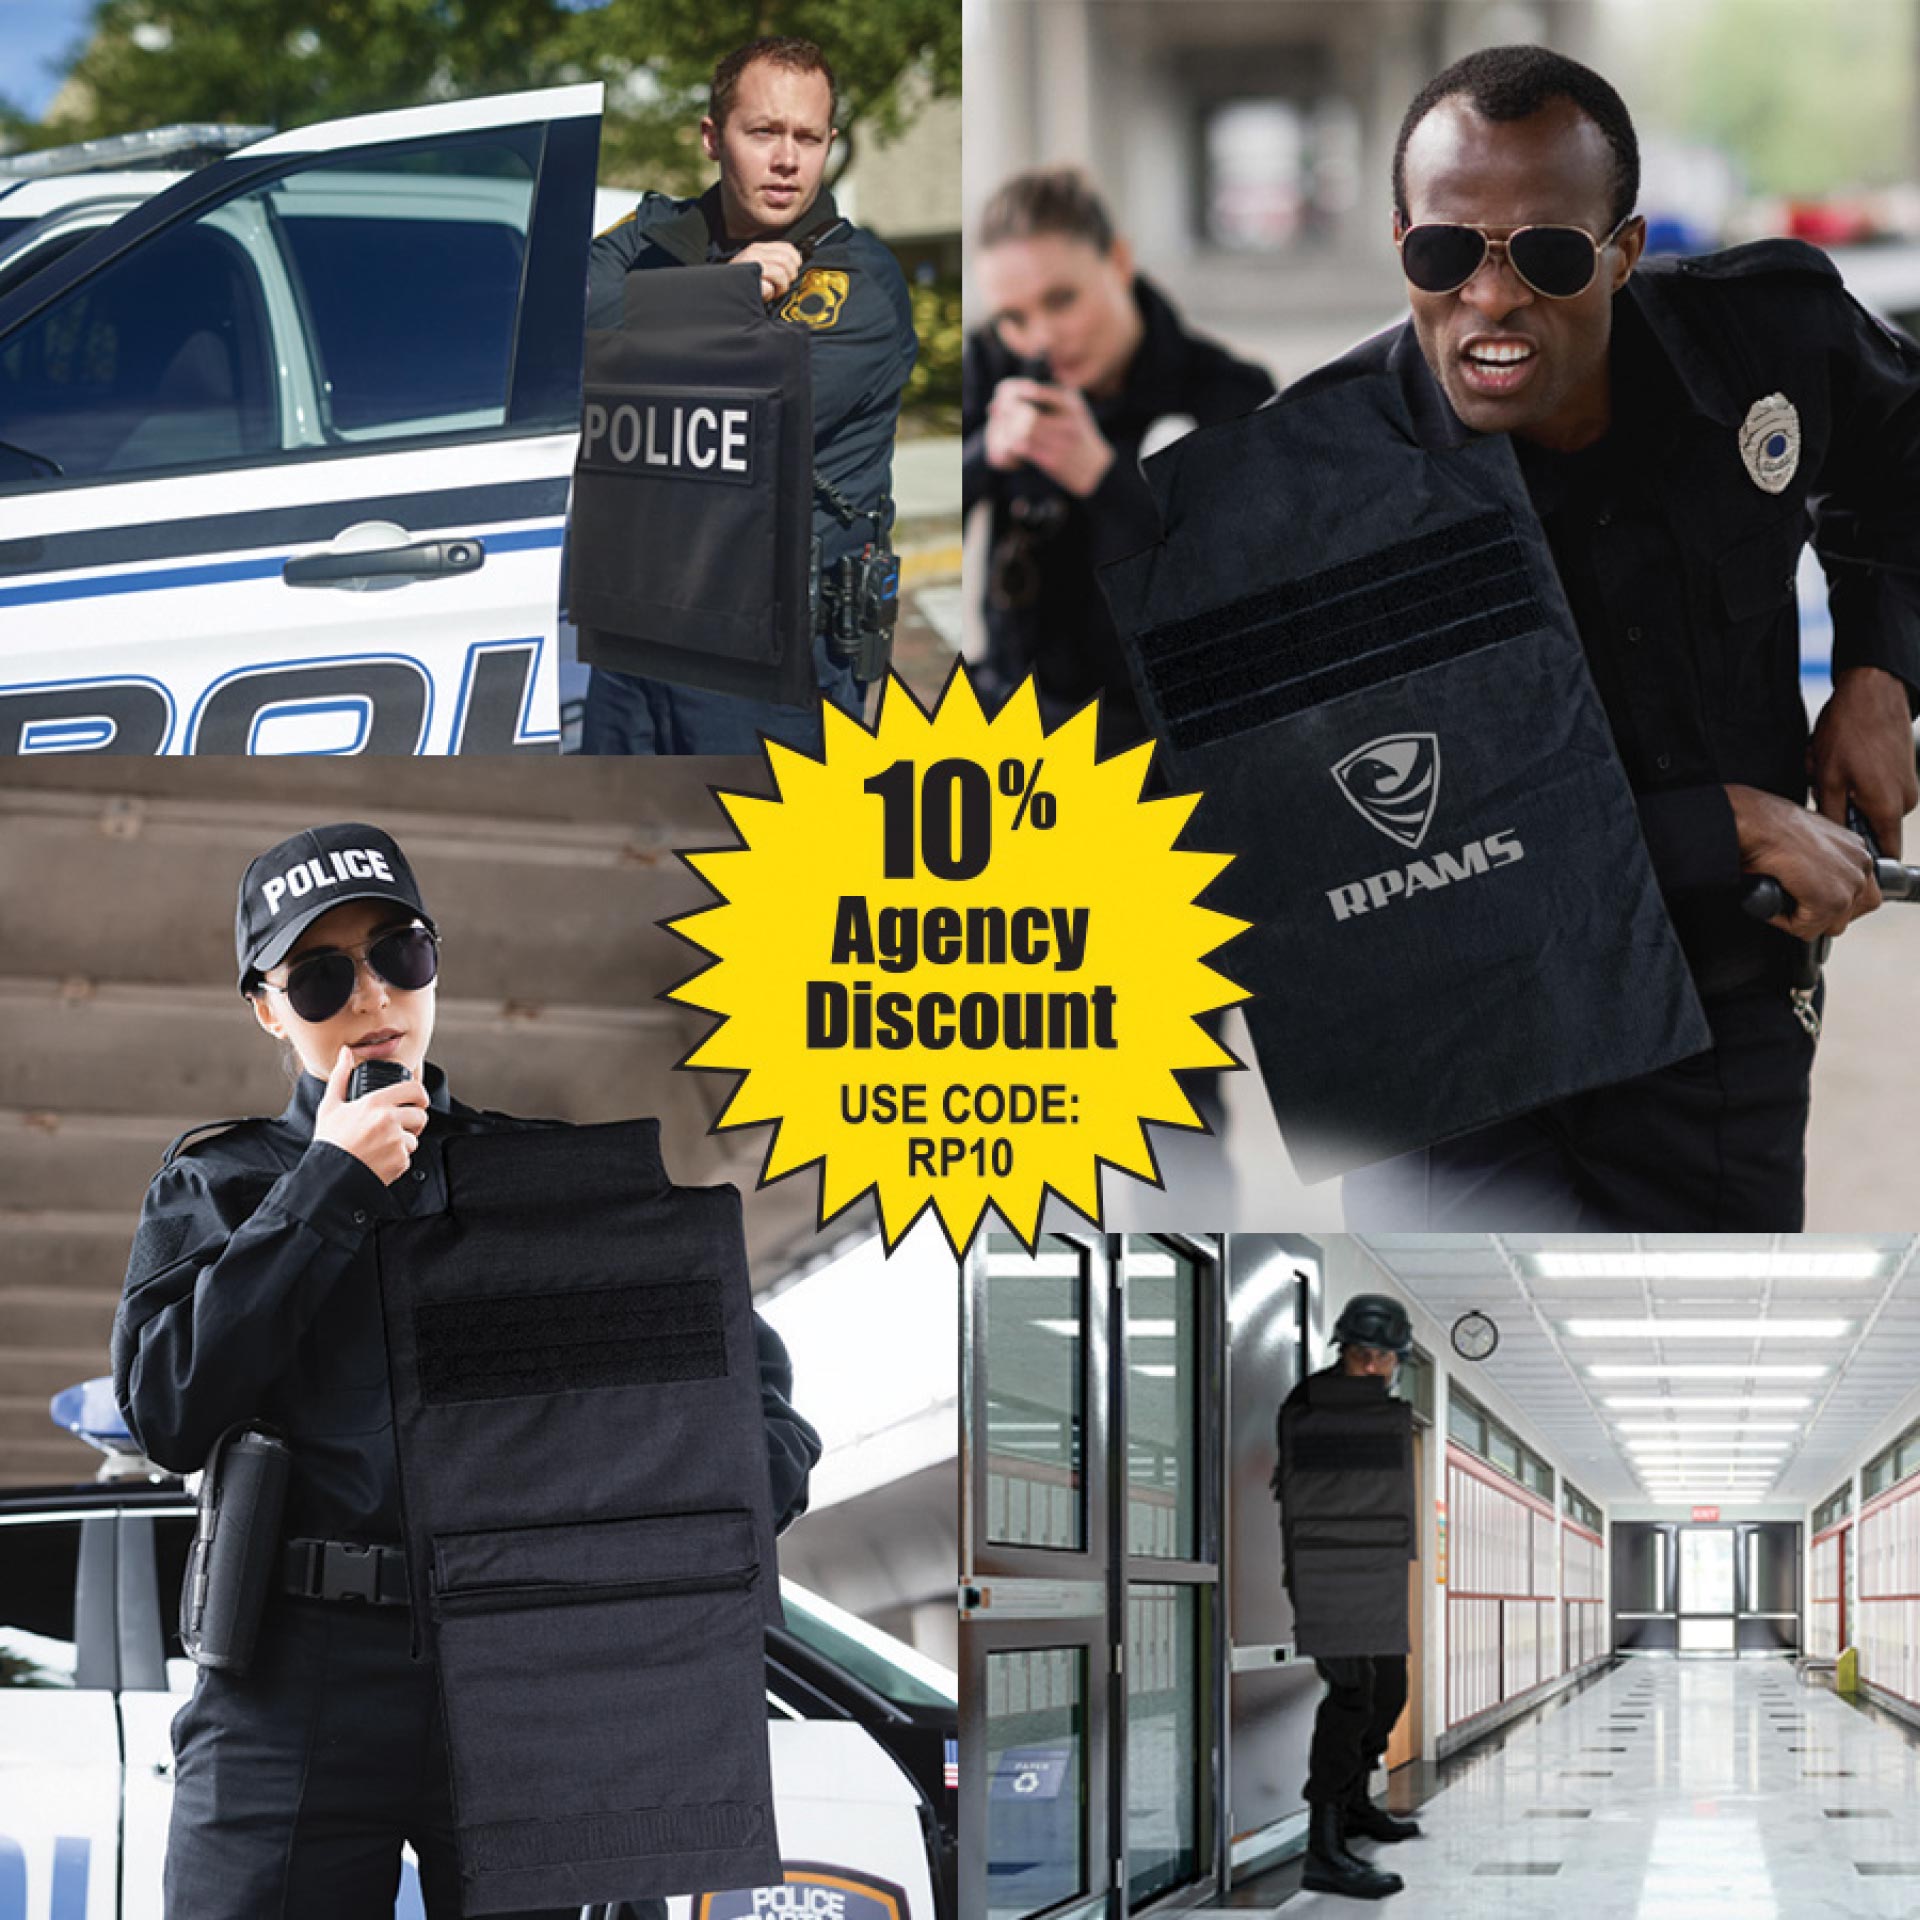 Ballistic shields for patrol - American Police Beat Magazine